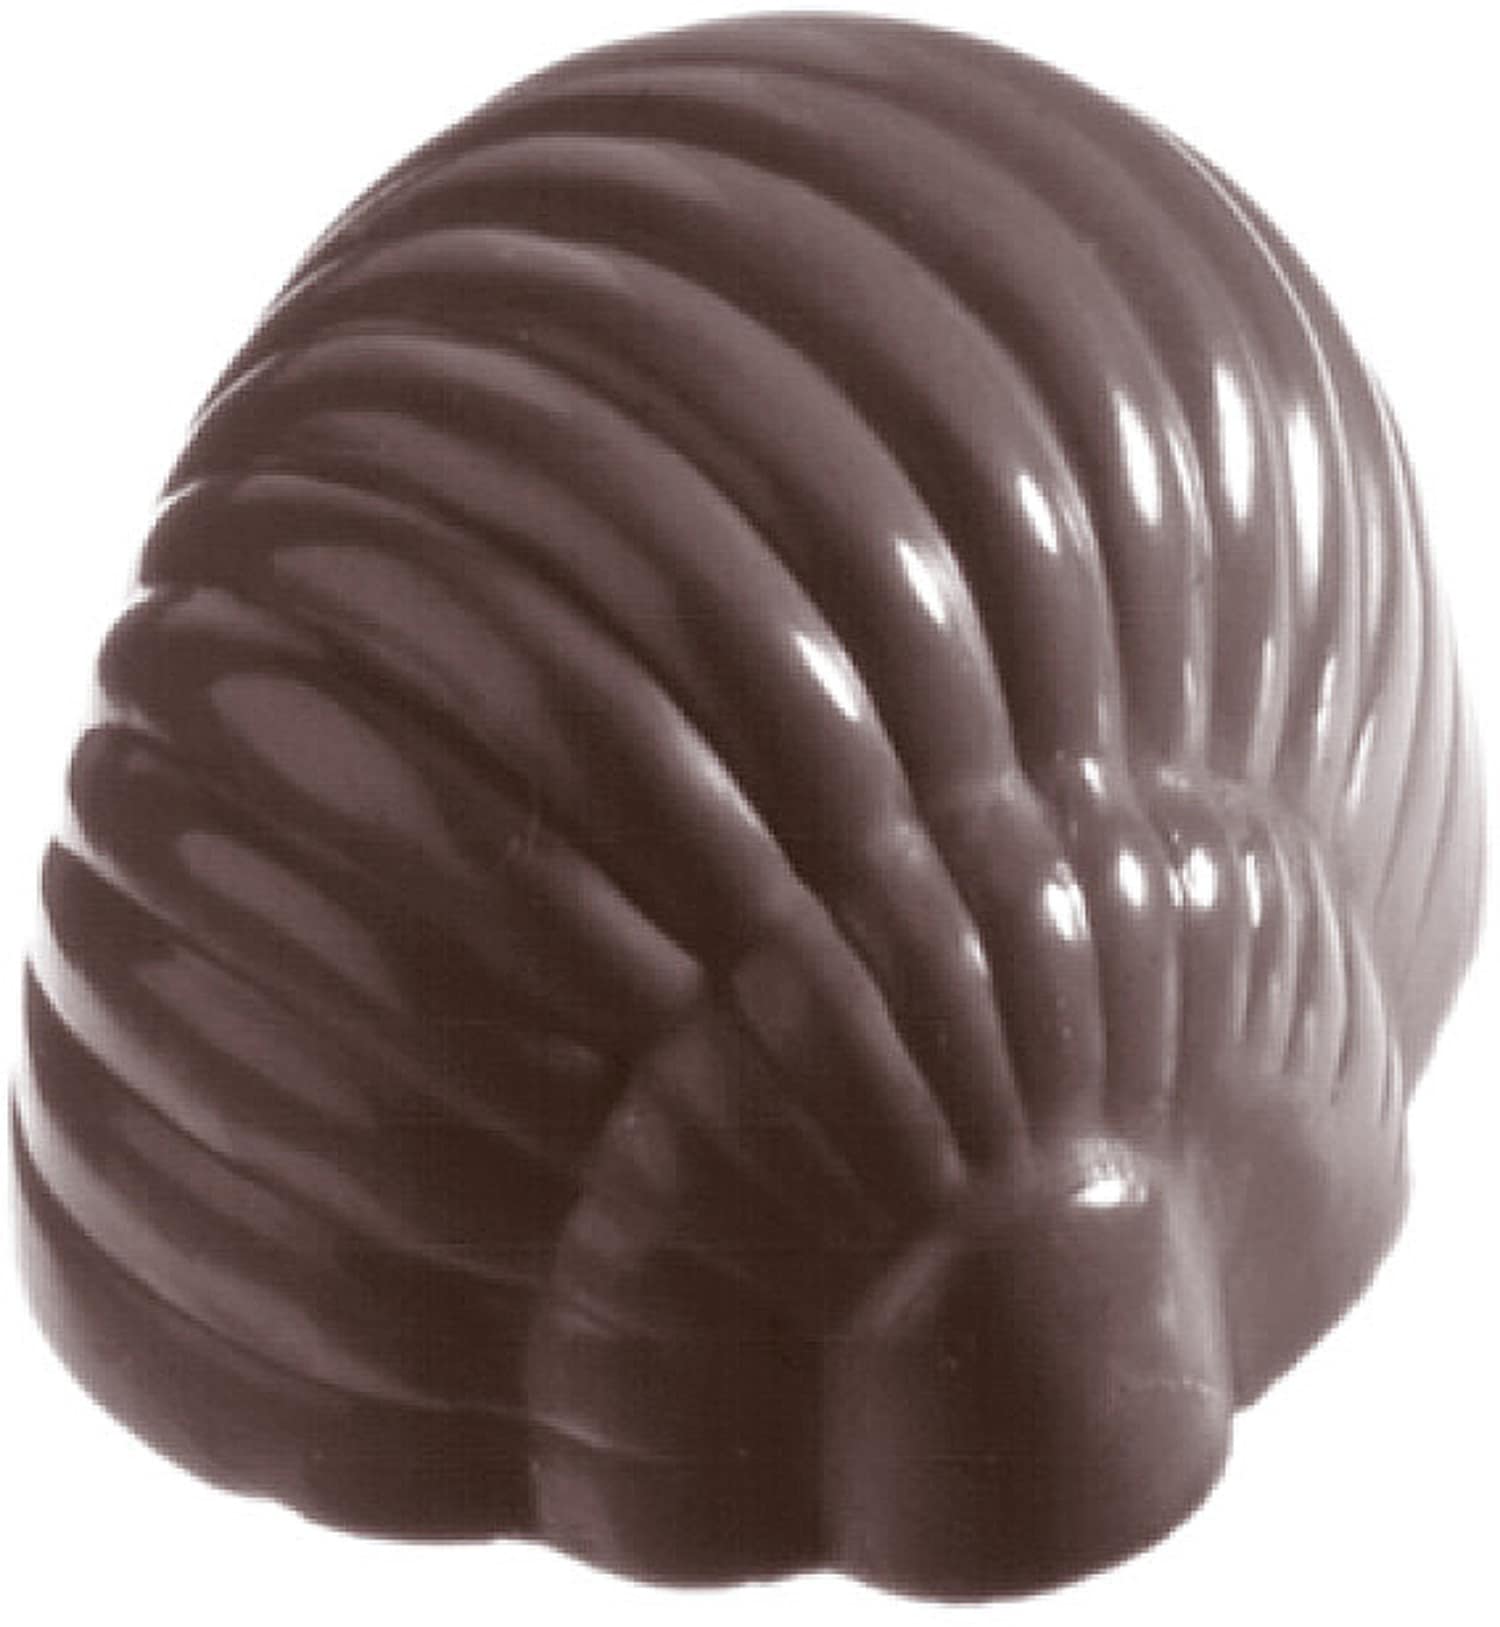 Schokoladenform "Meeresfrüchte" 421084